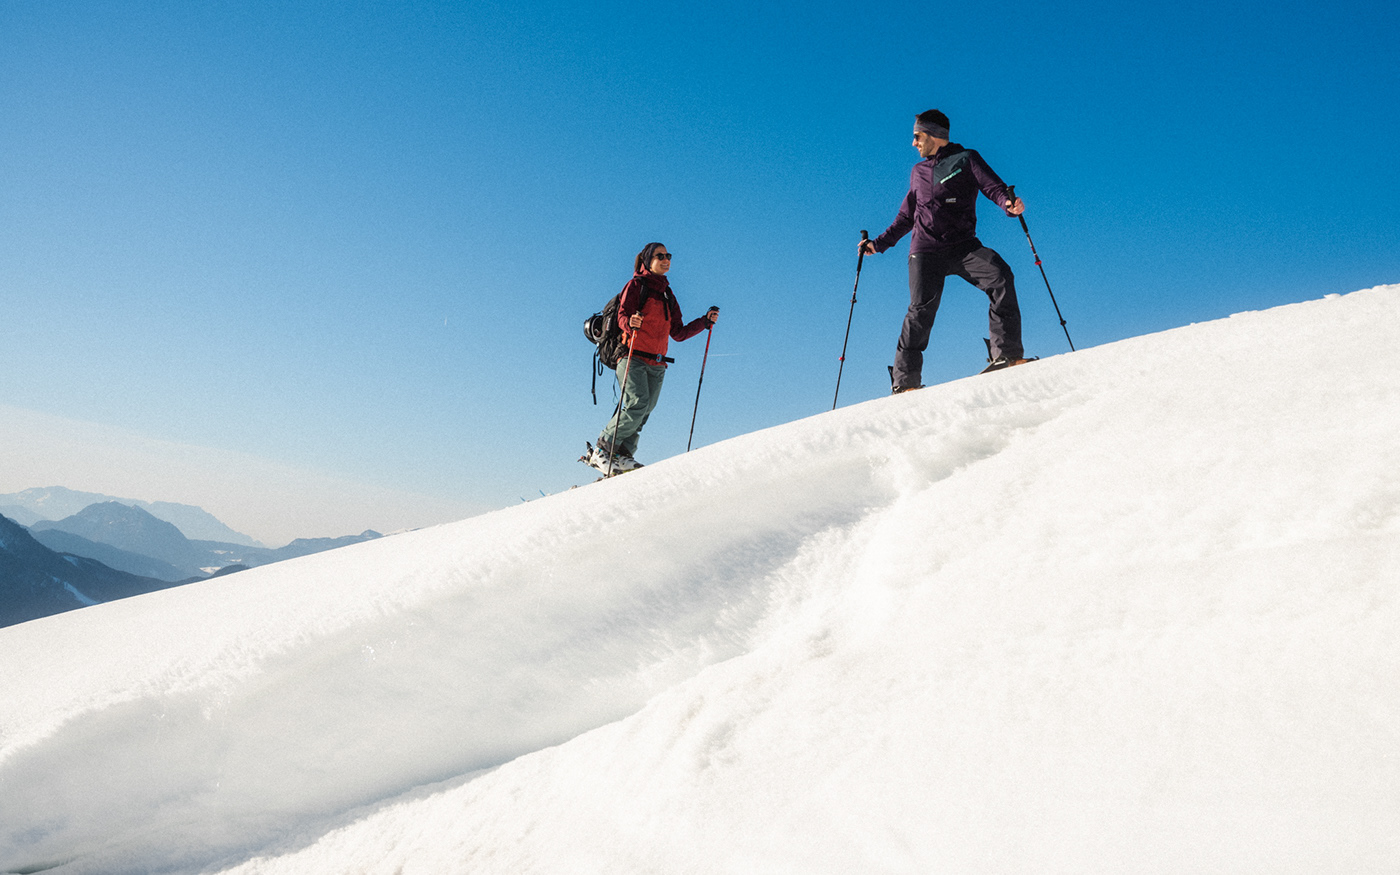 alps austria bivouac Camping Gear couple Landscape mountains Outdoor therm-a-rest winter